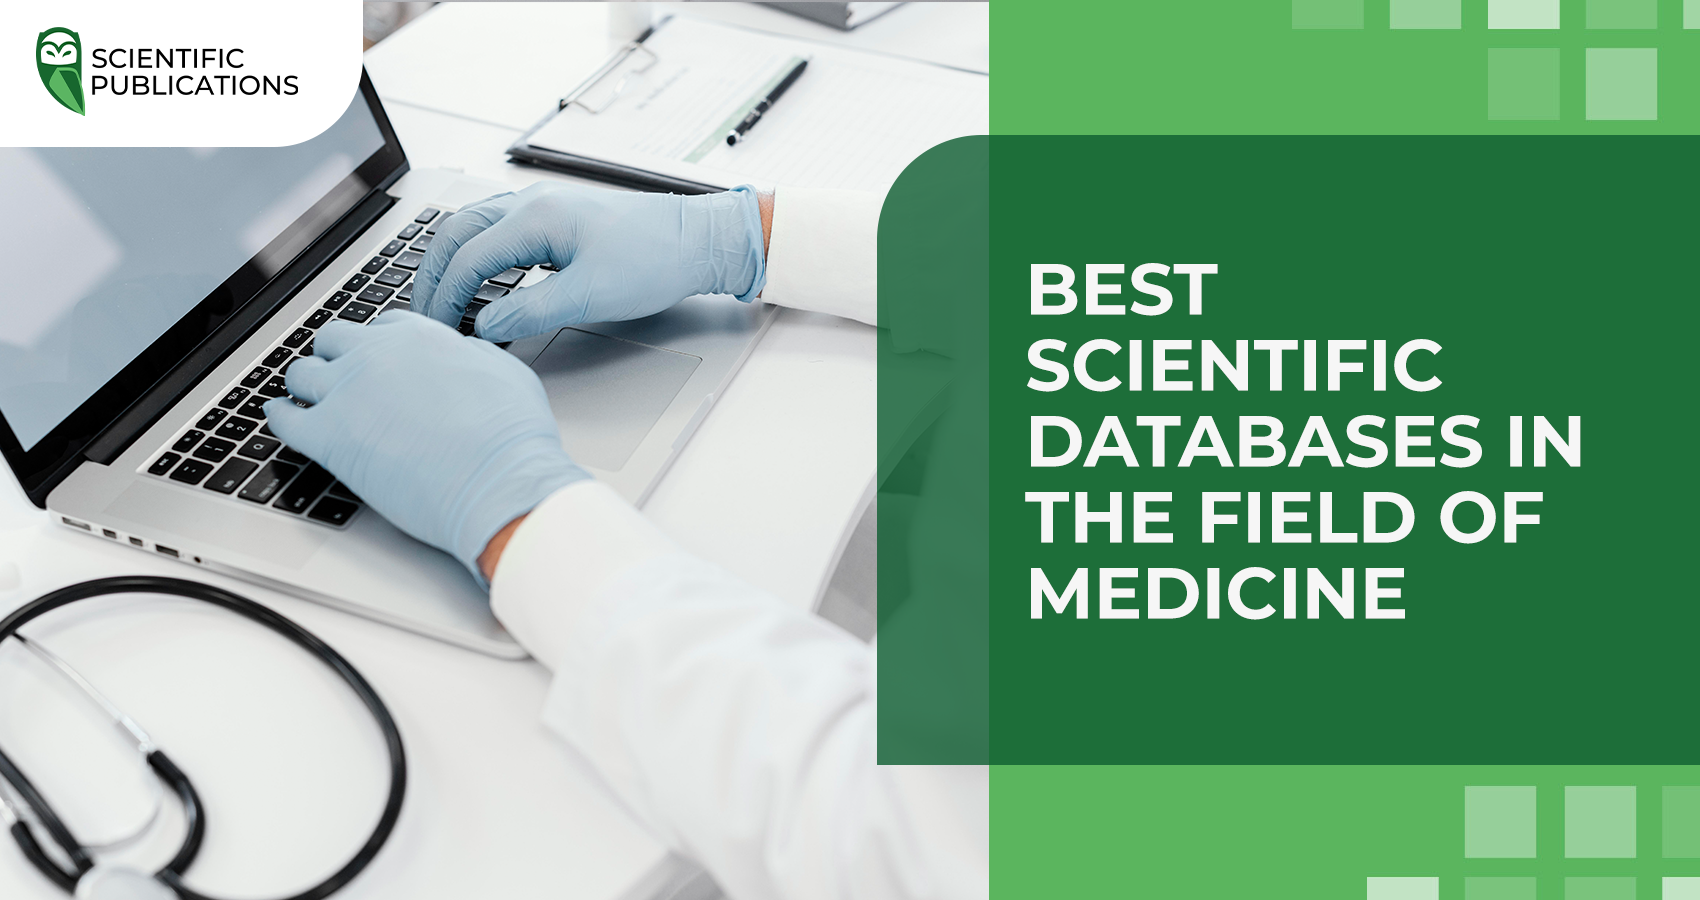 Best scientific databases in the field of medicine